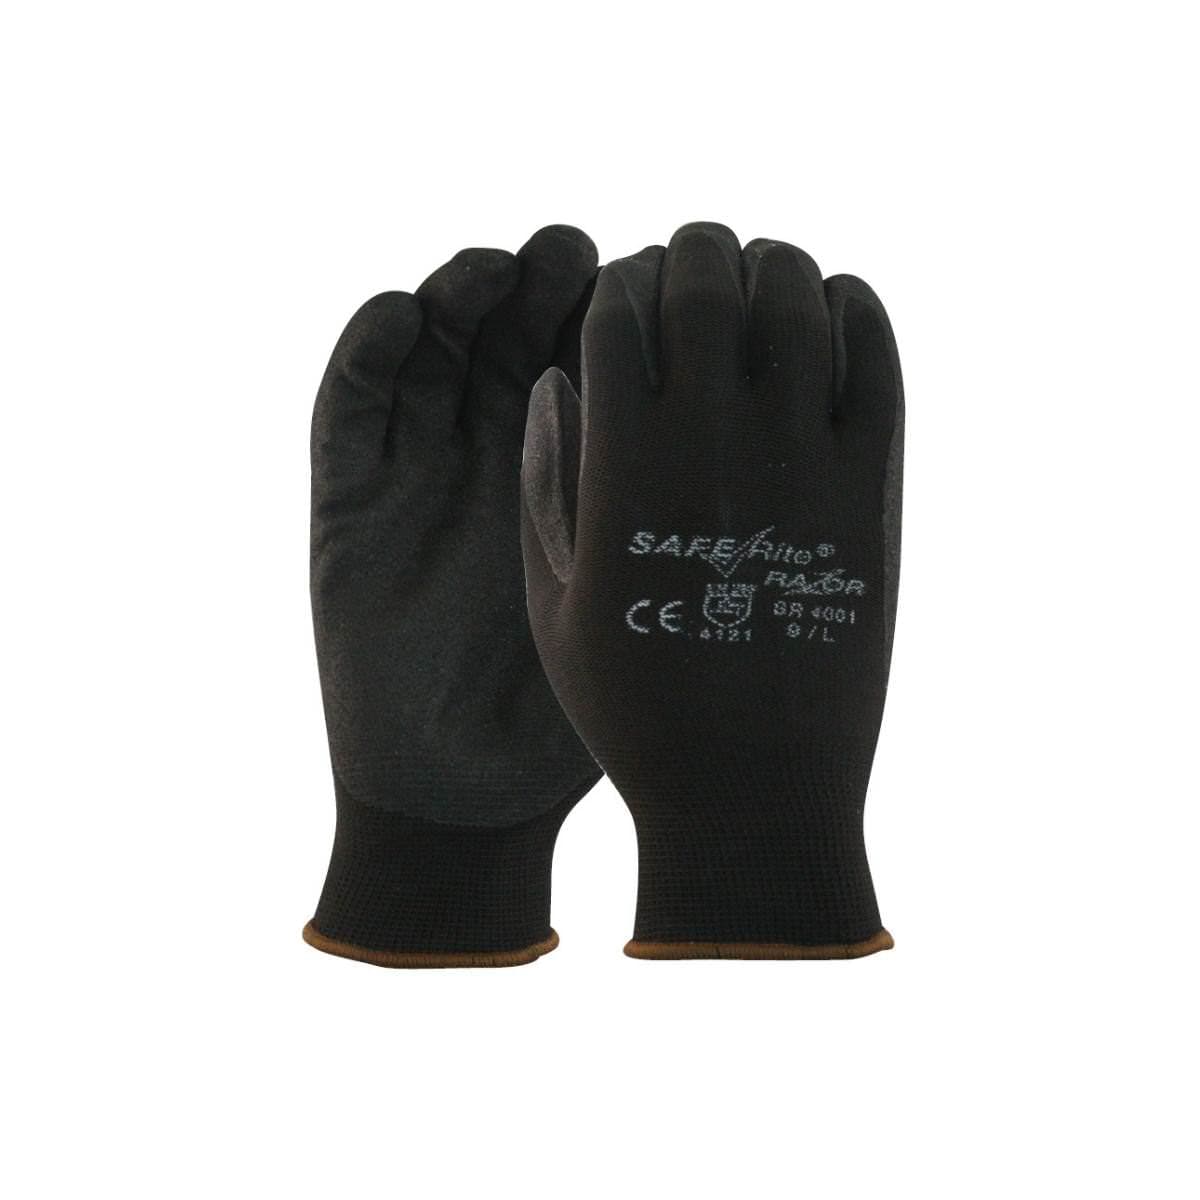 SafeRite® Nitrile Glove SR4001A (Pack of 12)